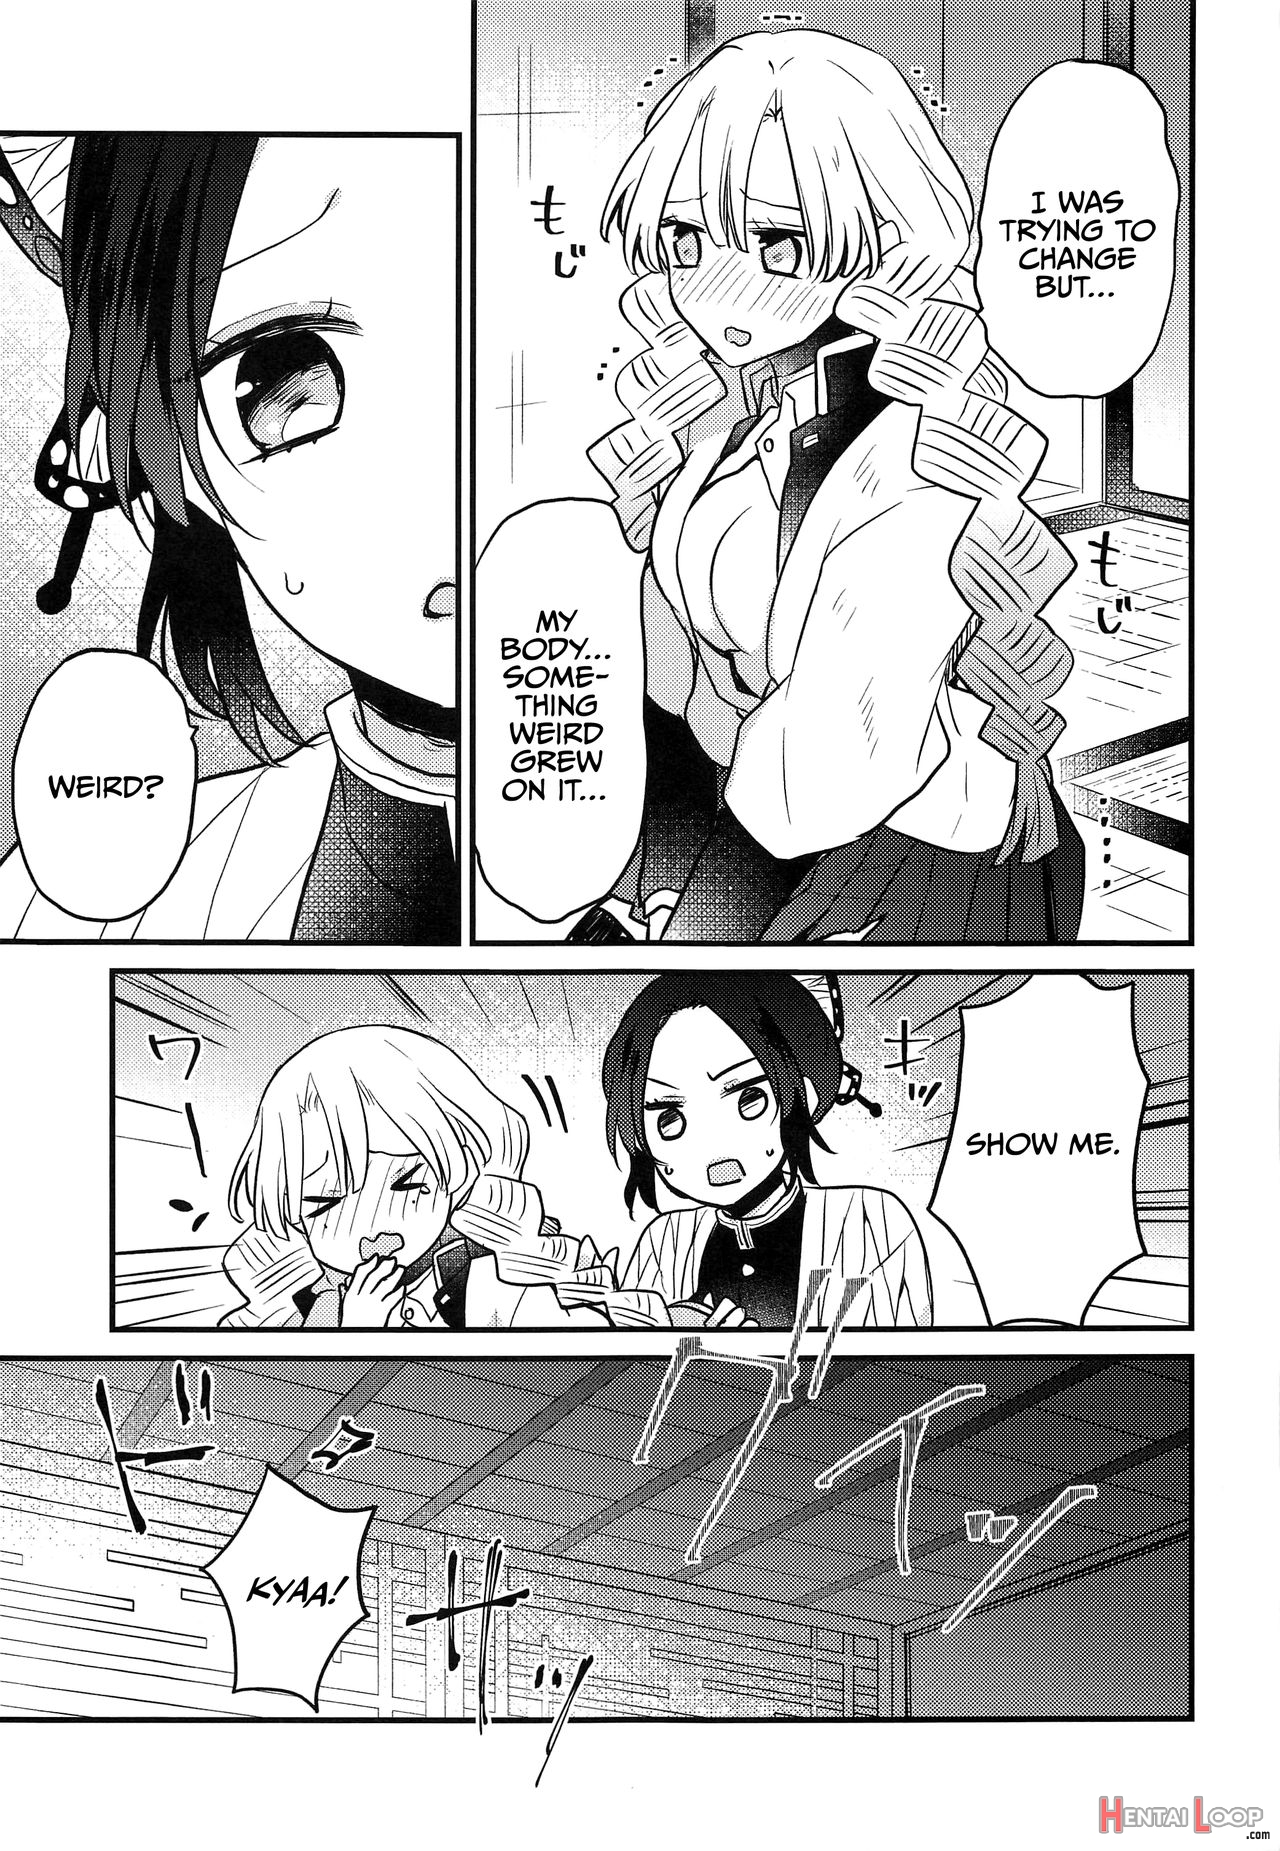 Mitsuri-chan's Futanari Incident page 6